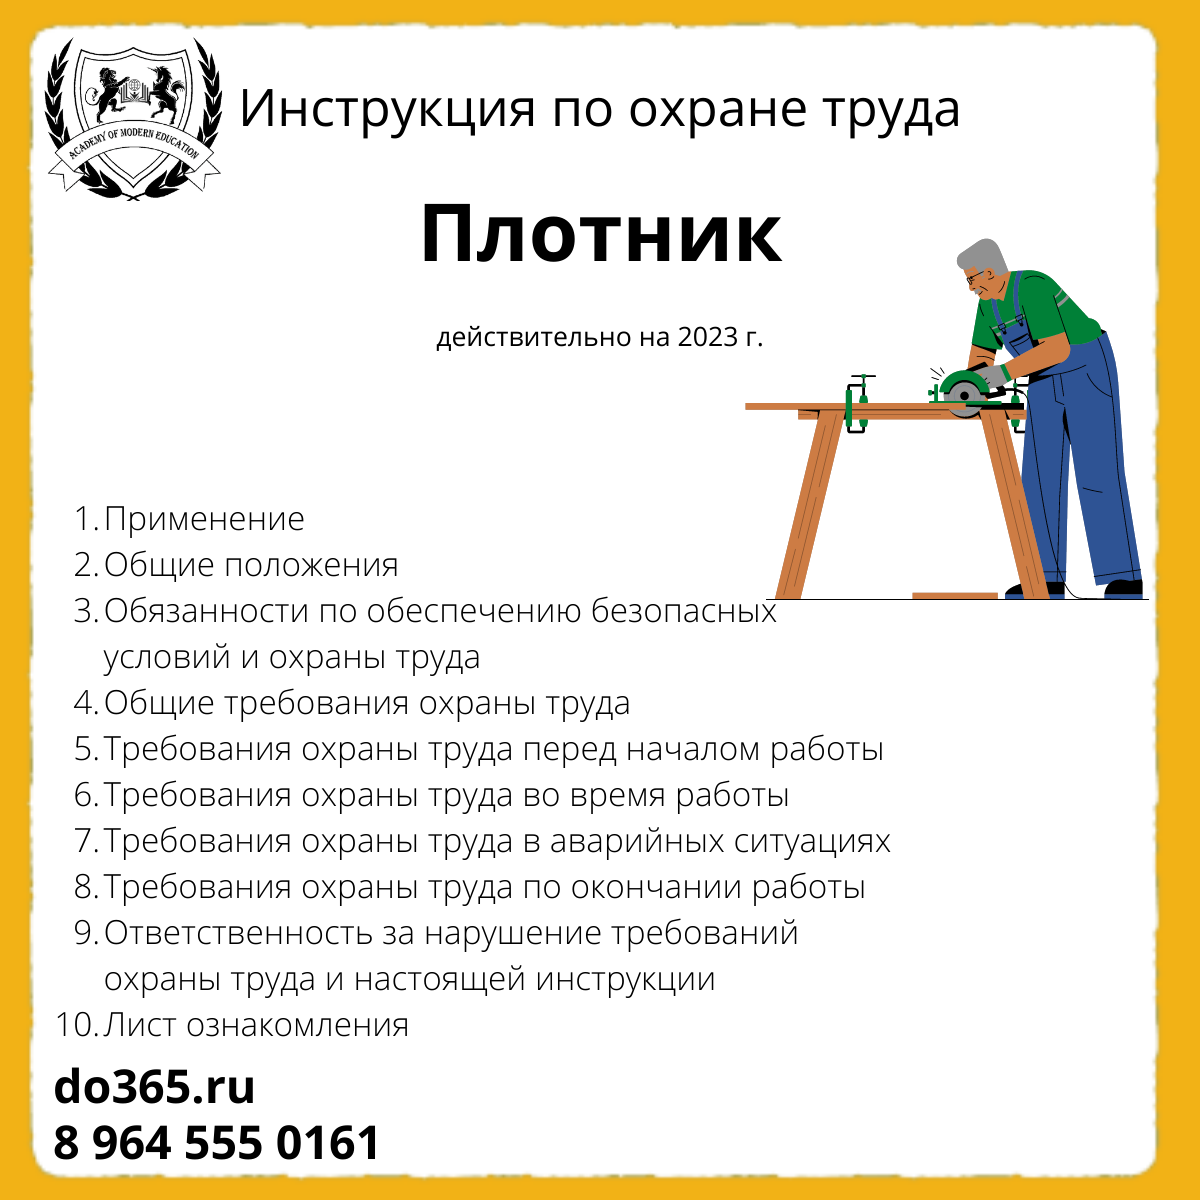 Техника безопасности плотника. Плакаты по охране труда для плотника. Инструкция плотника. Должностная инструкция плотника по охране труда. Инструкция для плотников